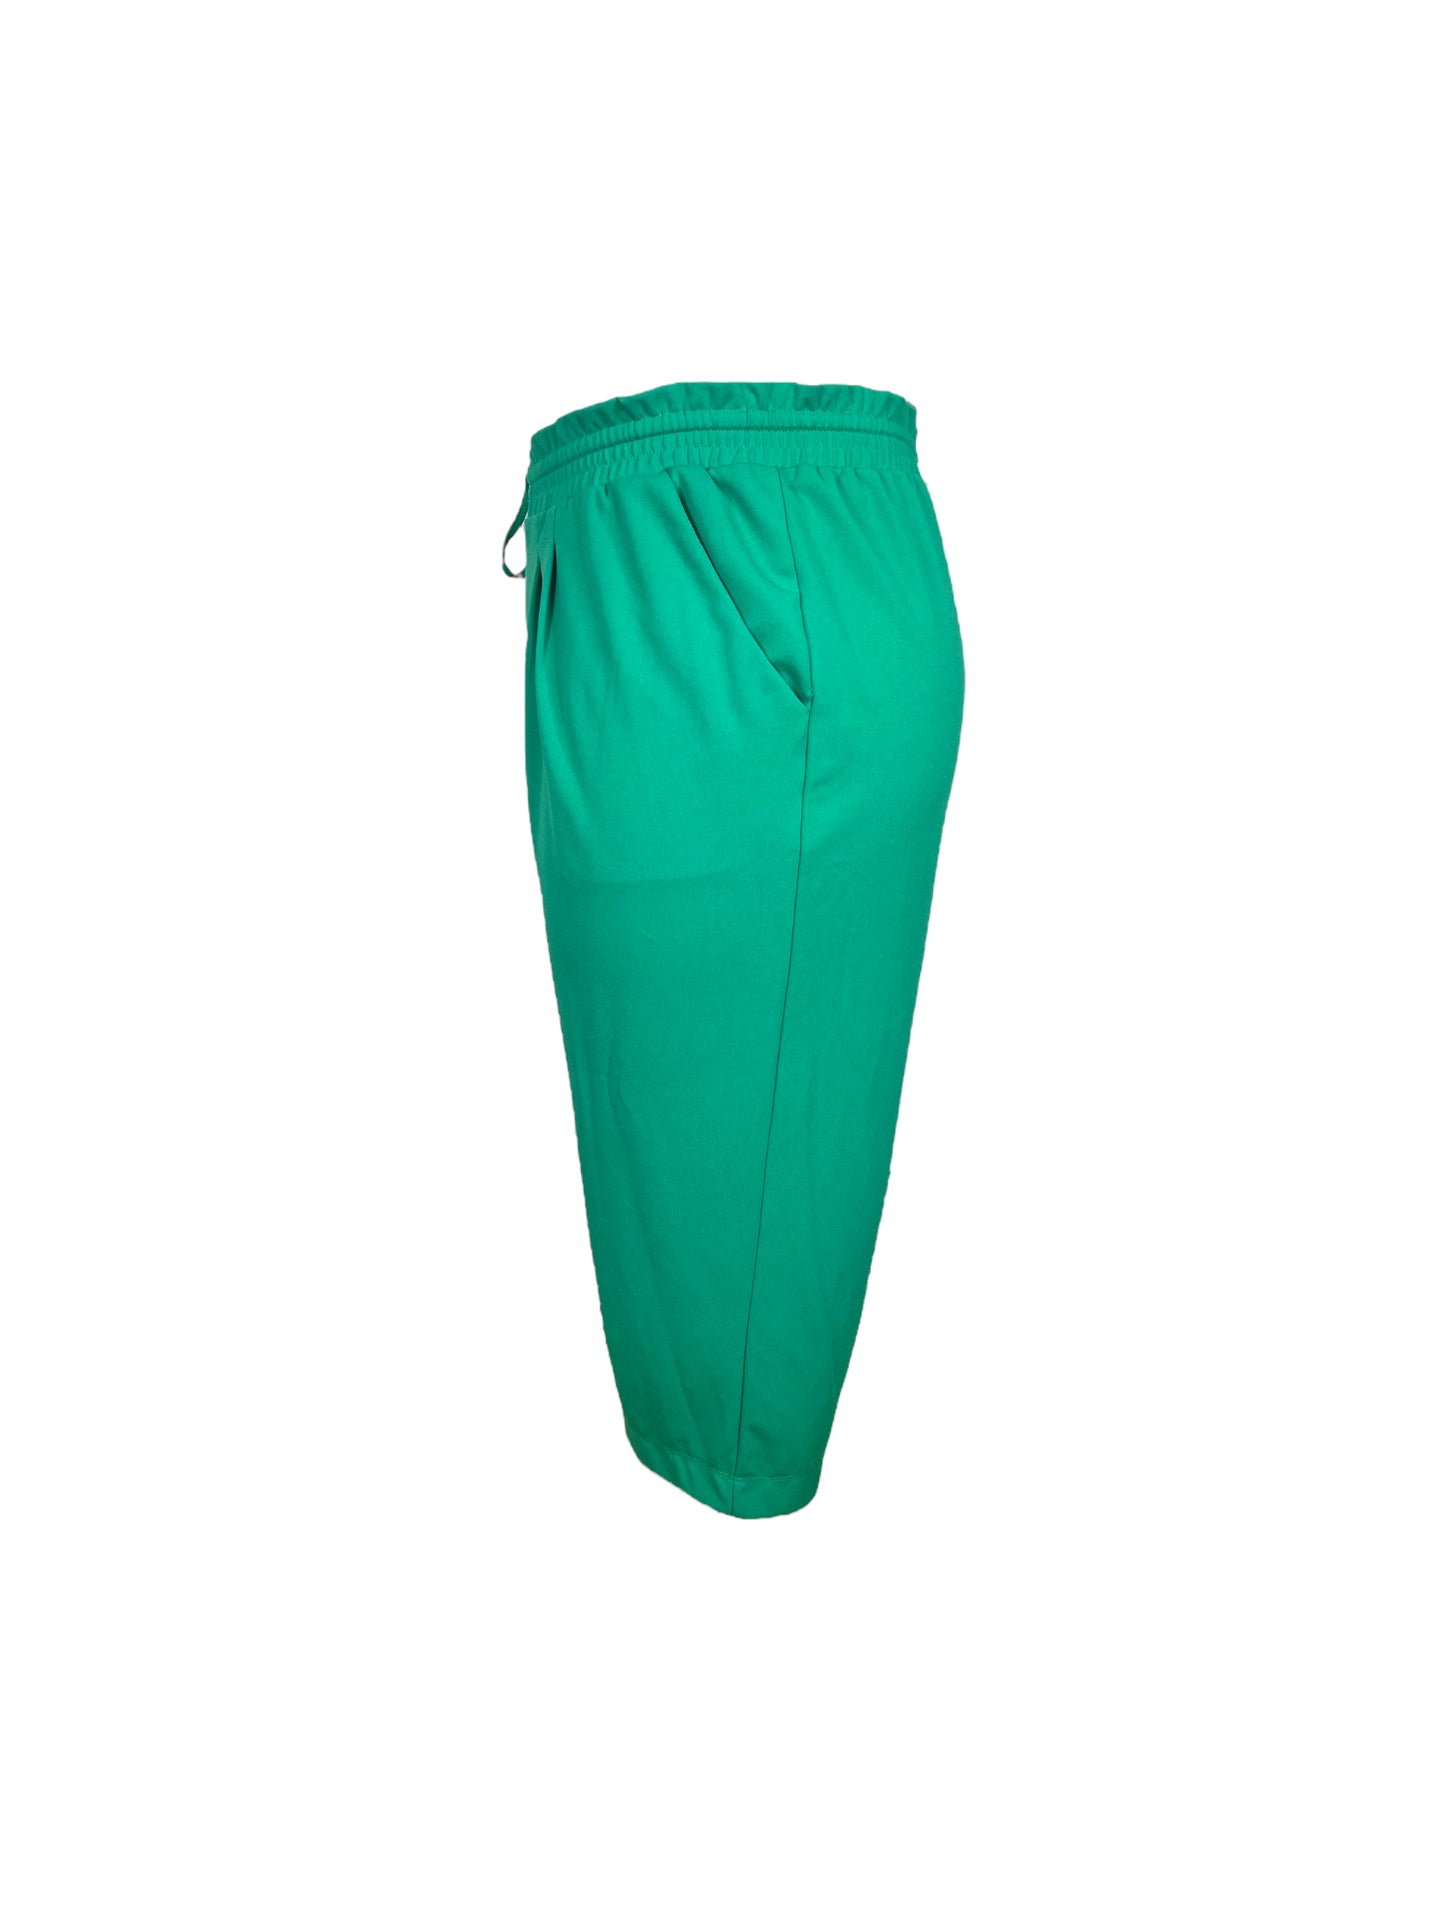 “Penningtons” Green Tie Dress Pants (5X)